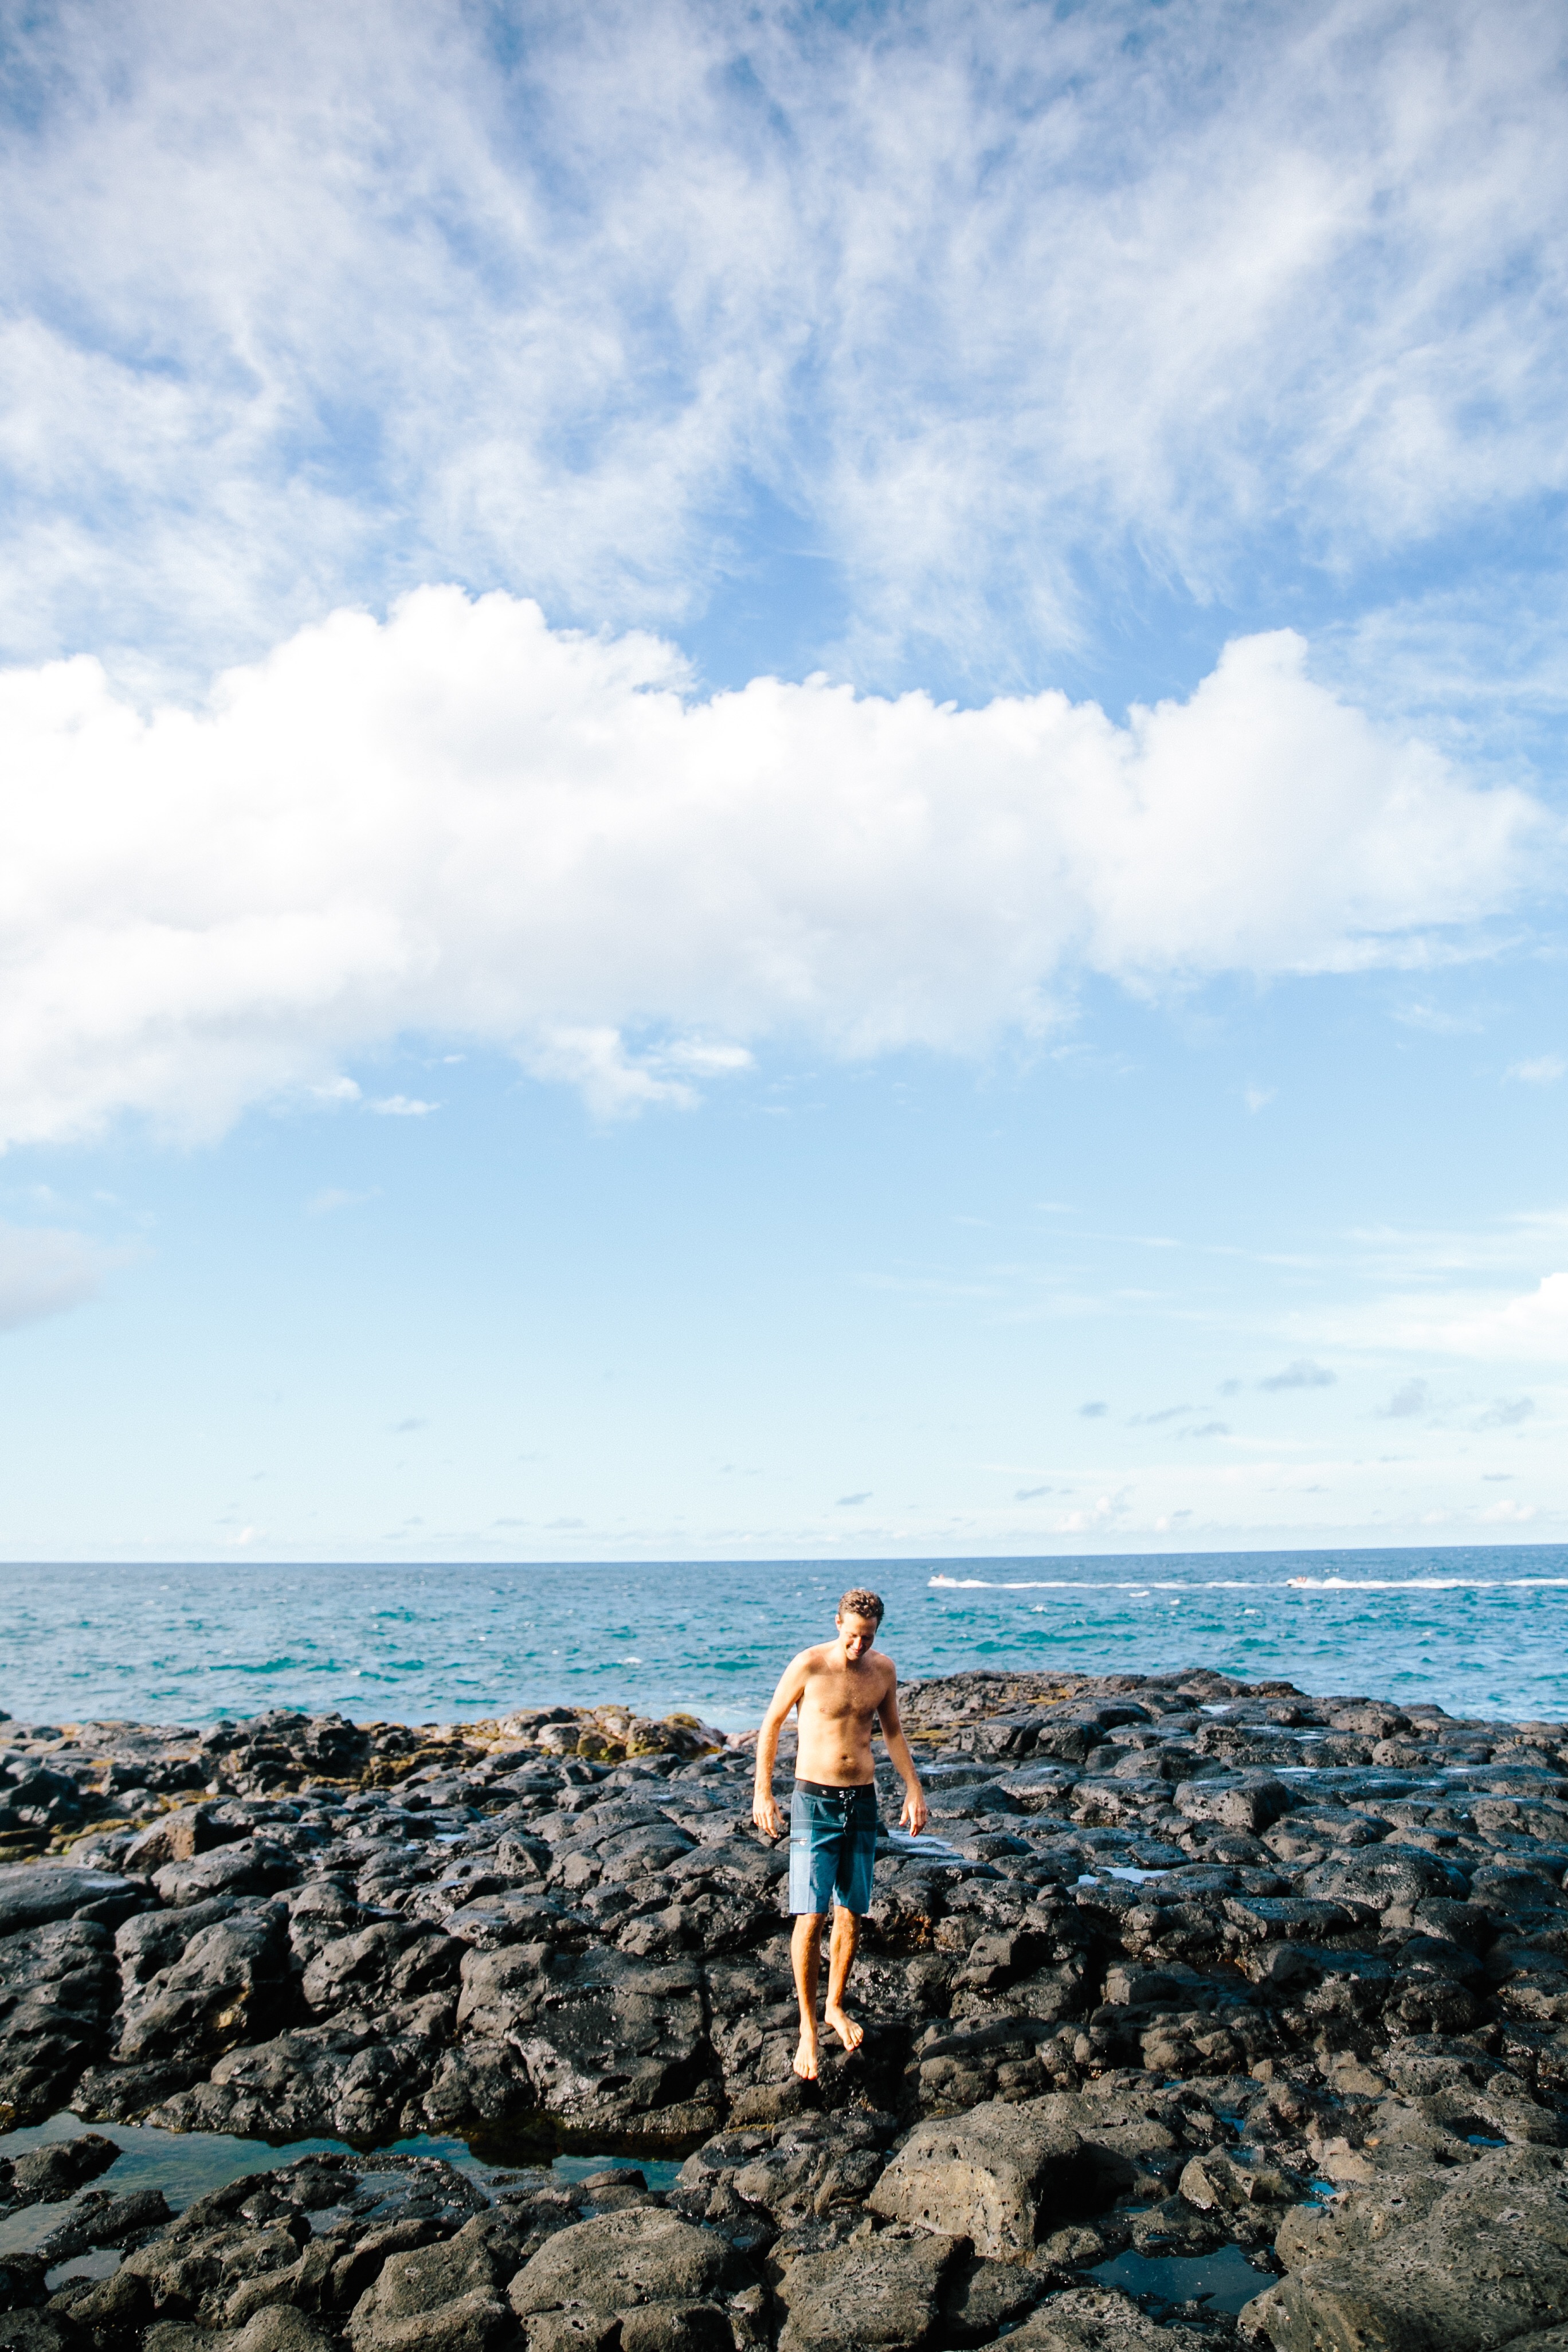 Queen's Bath Kauai | Travel Guide to Kauai, Hawaii | Travel Tips for Kauai | Packing List for Kauai | Helpful Tips for Traveling to Kauai | Kauai Travel Guide | Hawaii Travel Guide | Why You Should Visit Hawaii | Napali Coast Boat Excursion | Activities To Do in Kauai | Best Vacation Places in the World via @elanaloo + elanaloo.com